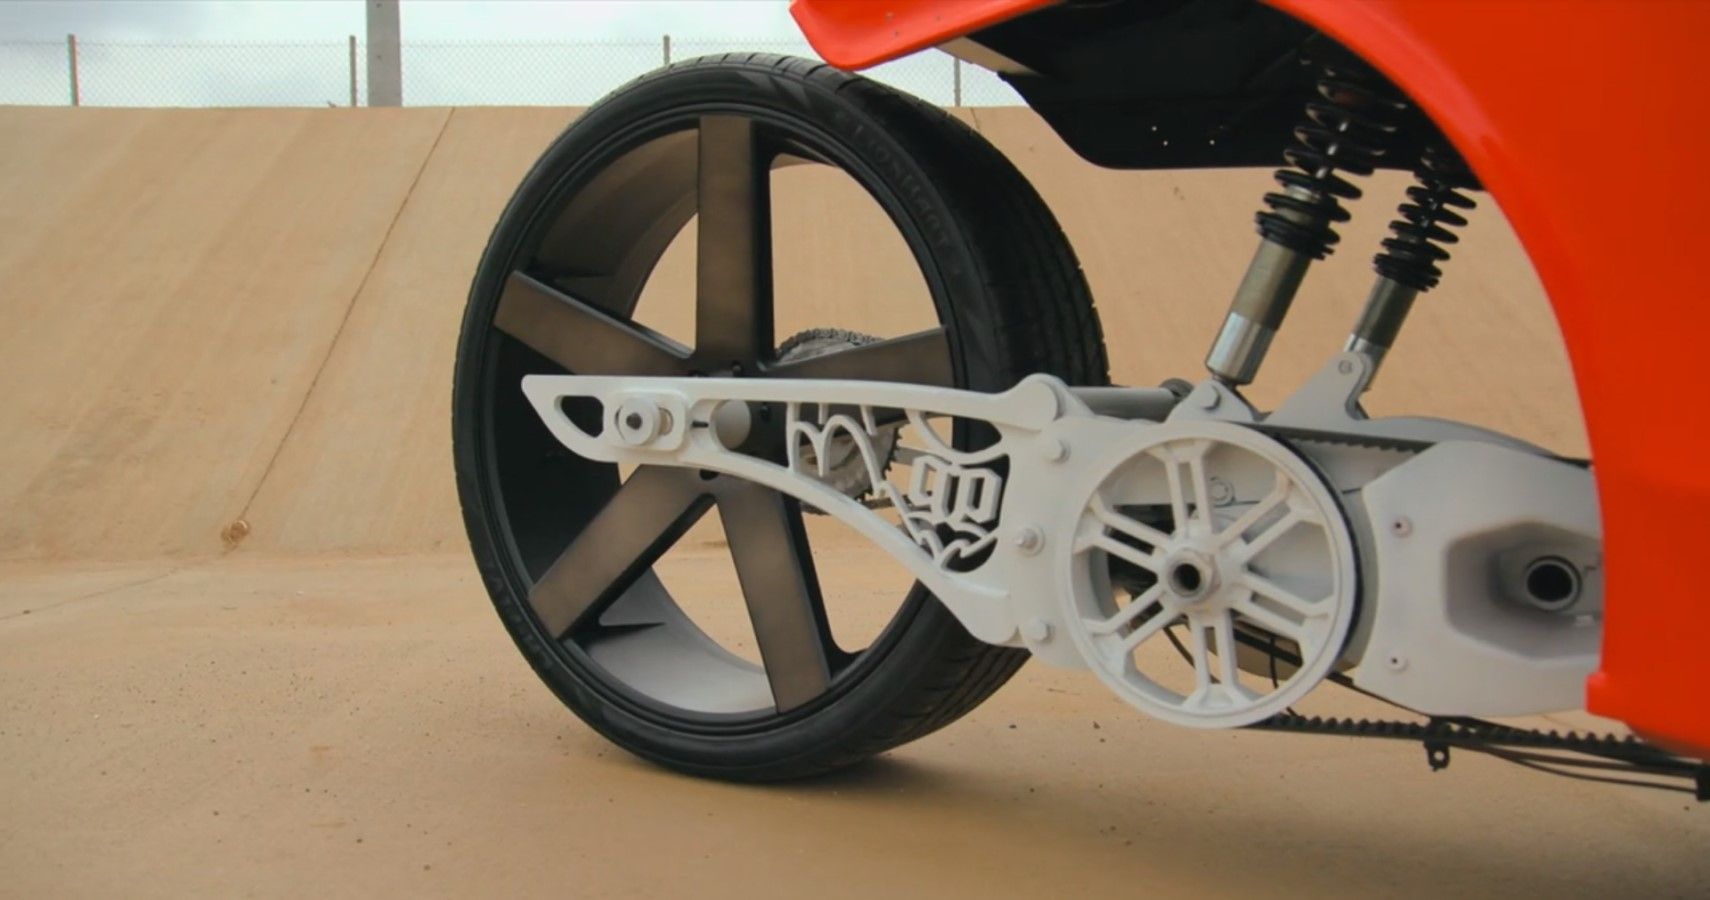 Gotham Garage Polaris Slingshot hot rod build gigantic rear wheel close-up view